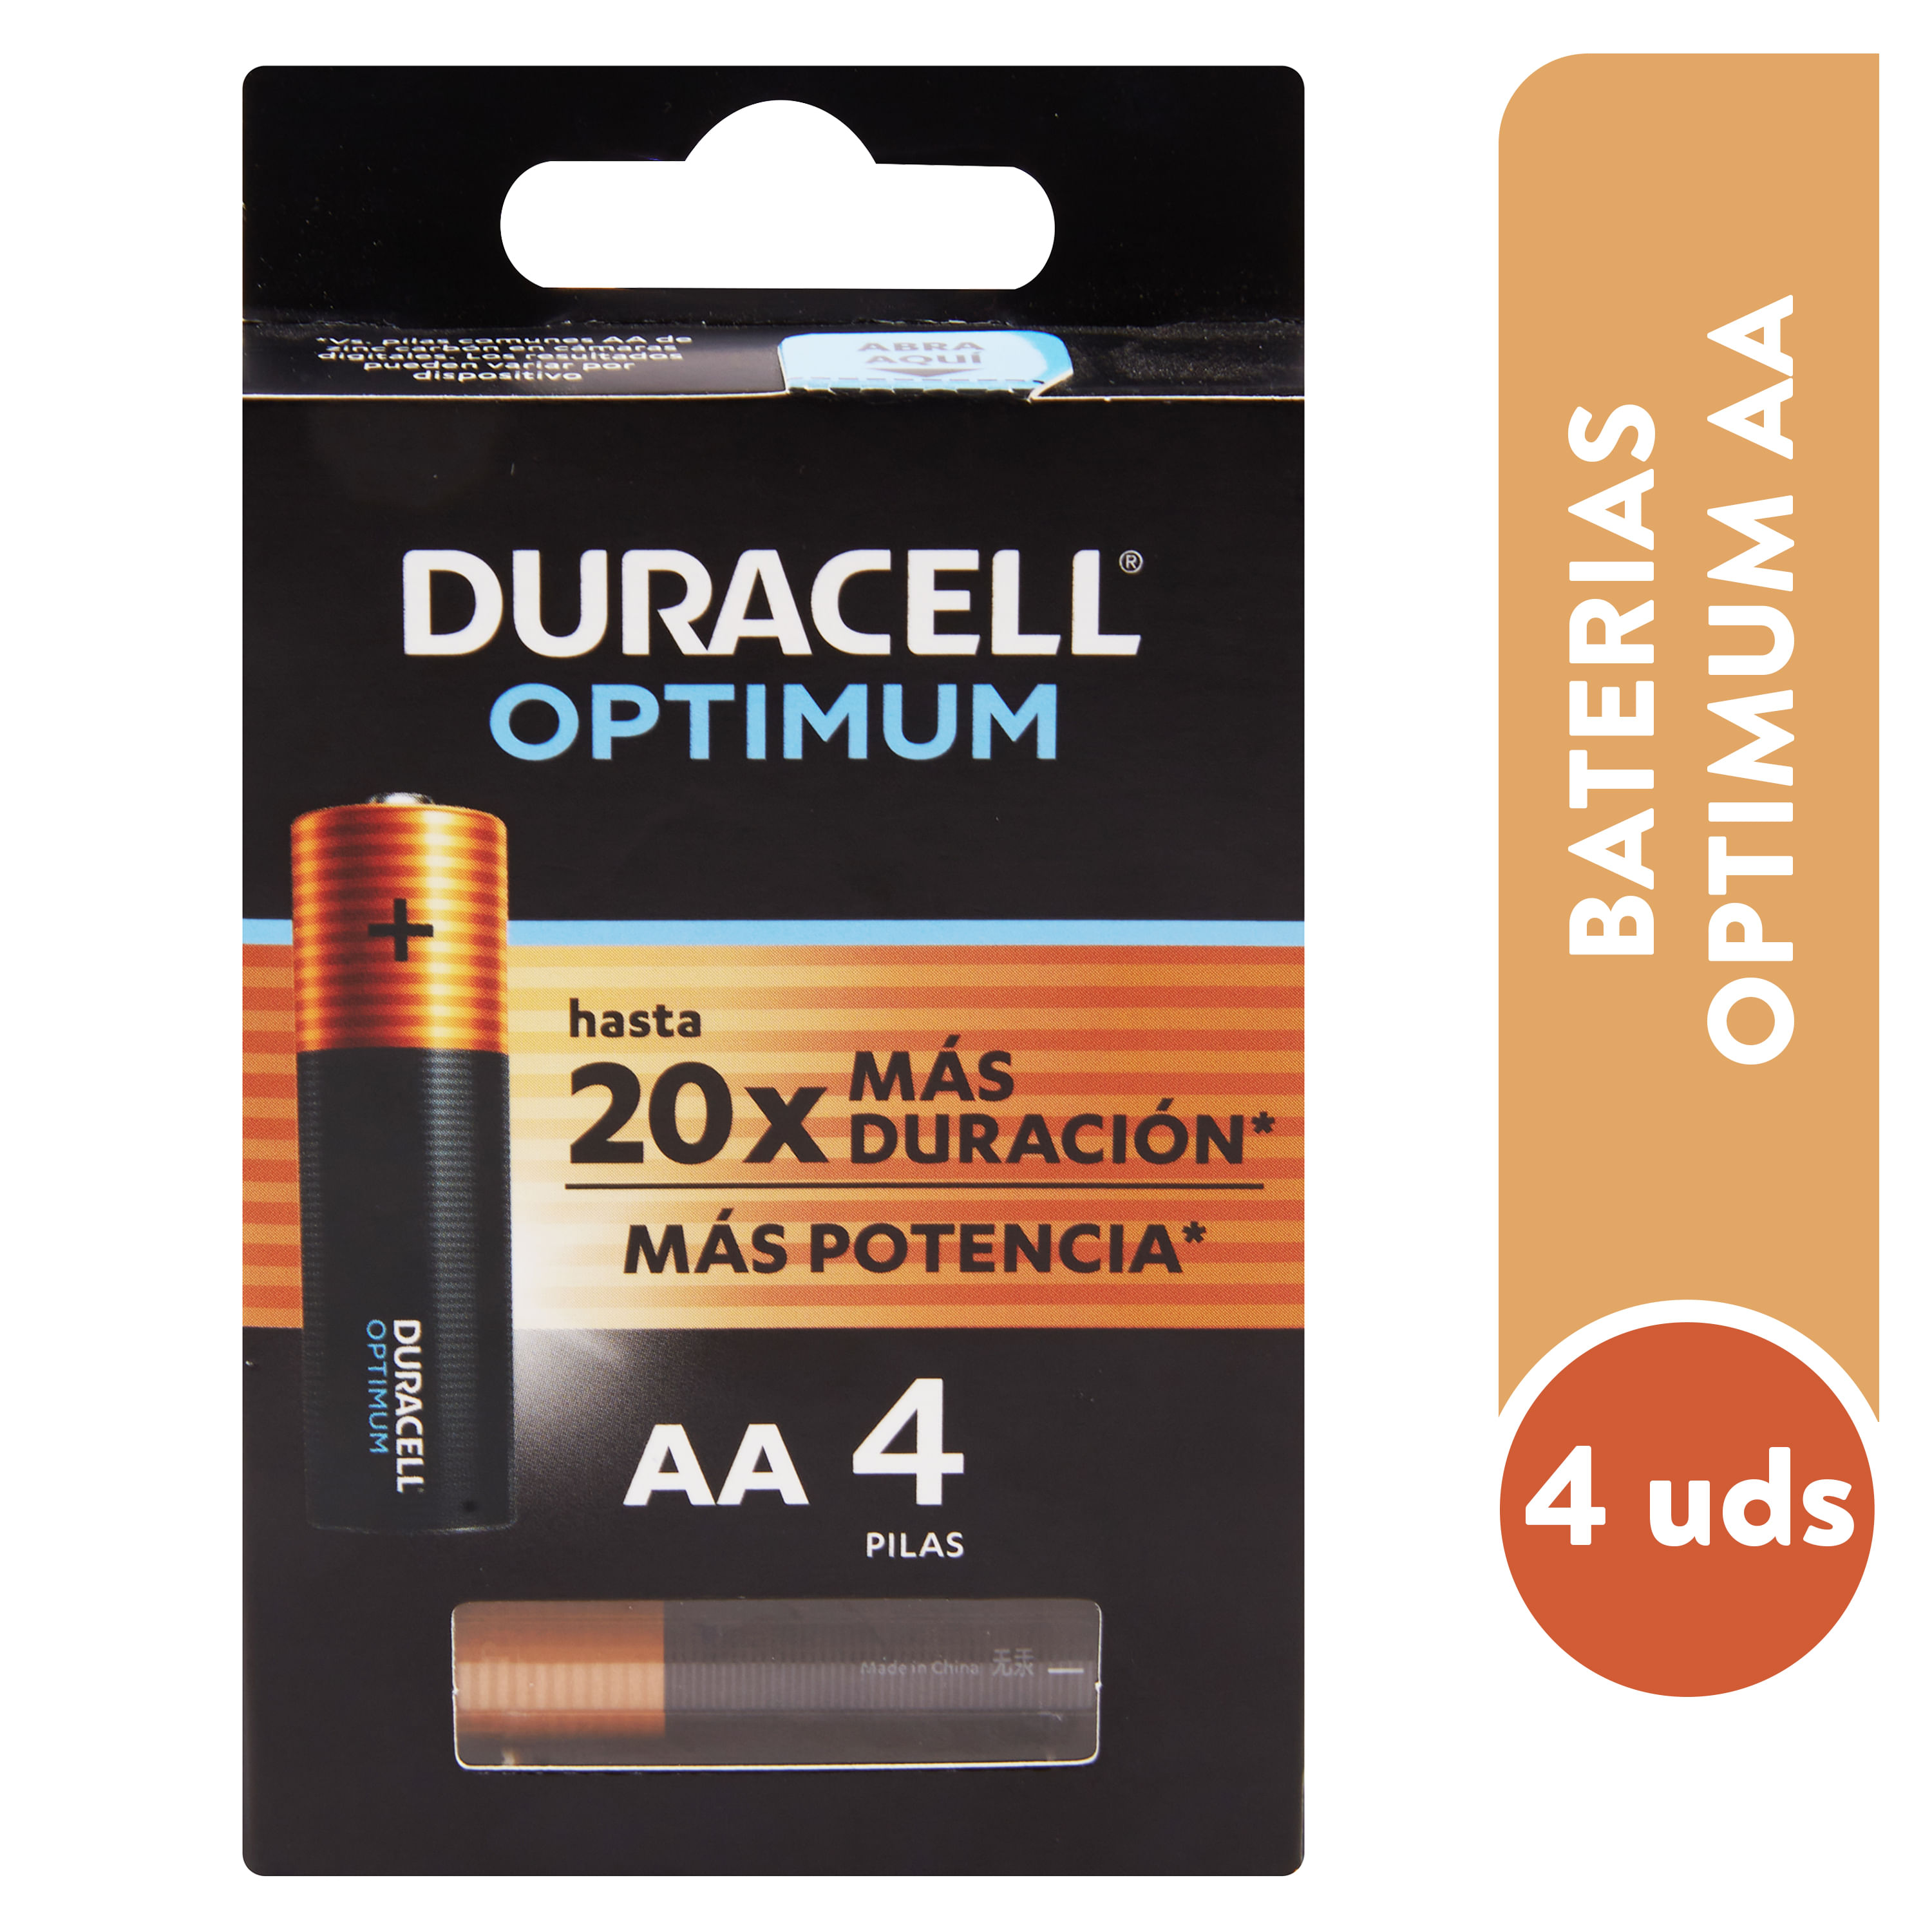 Comprar Duracell Optimum Aa 4 Ea Unidades, Walmart Guatemala - Maxi  Despensa